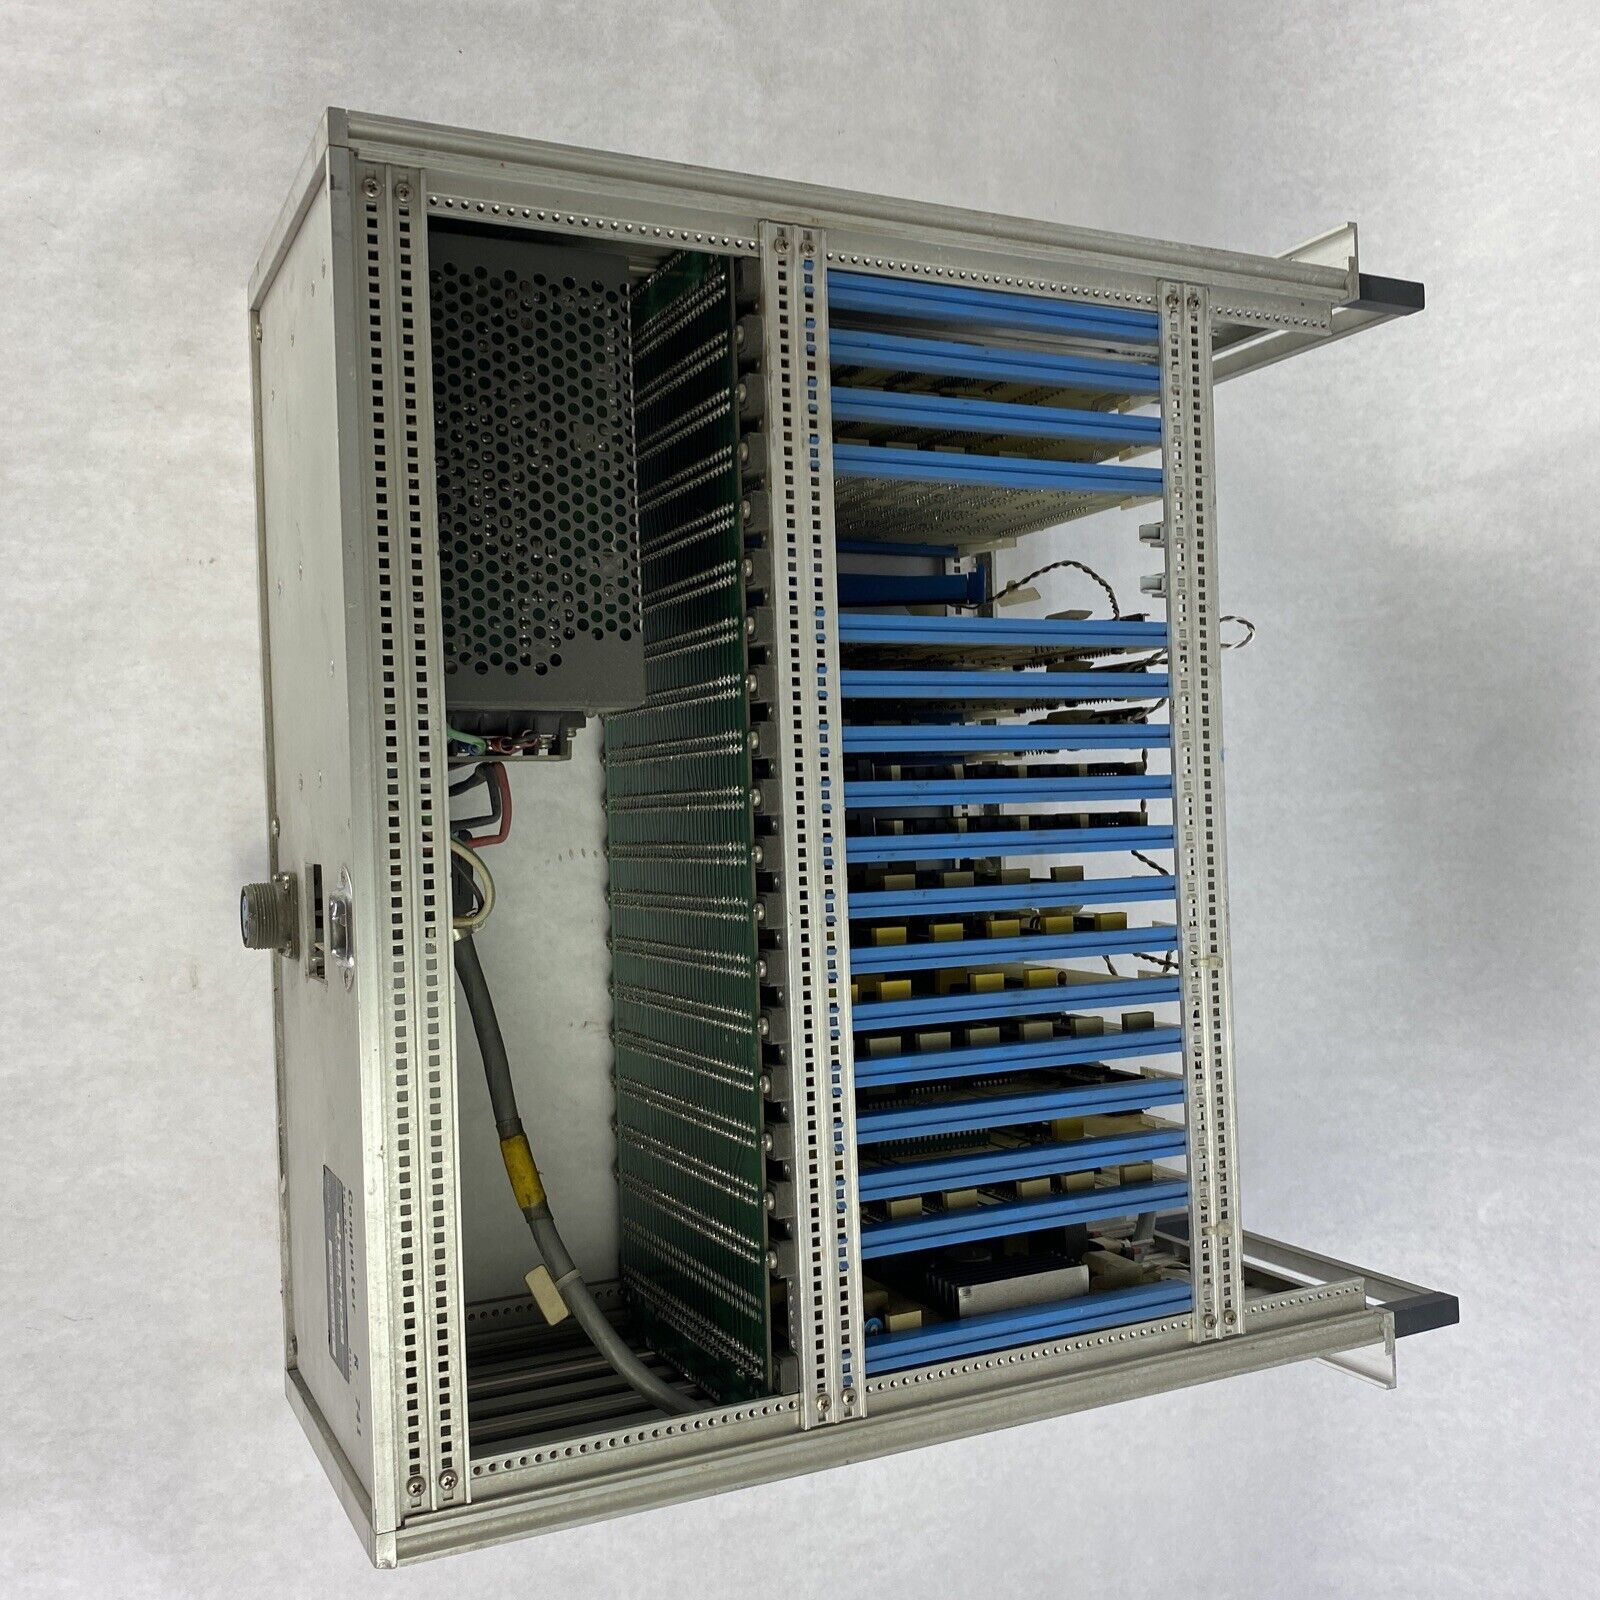 Sharnoa Computer R-741 Rack Mount 220VAC -Parts or Repair